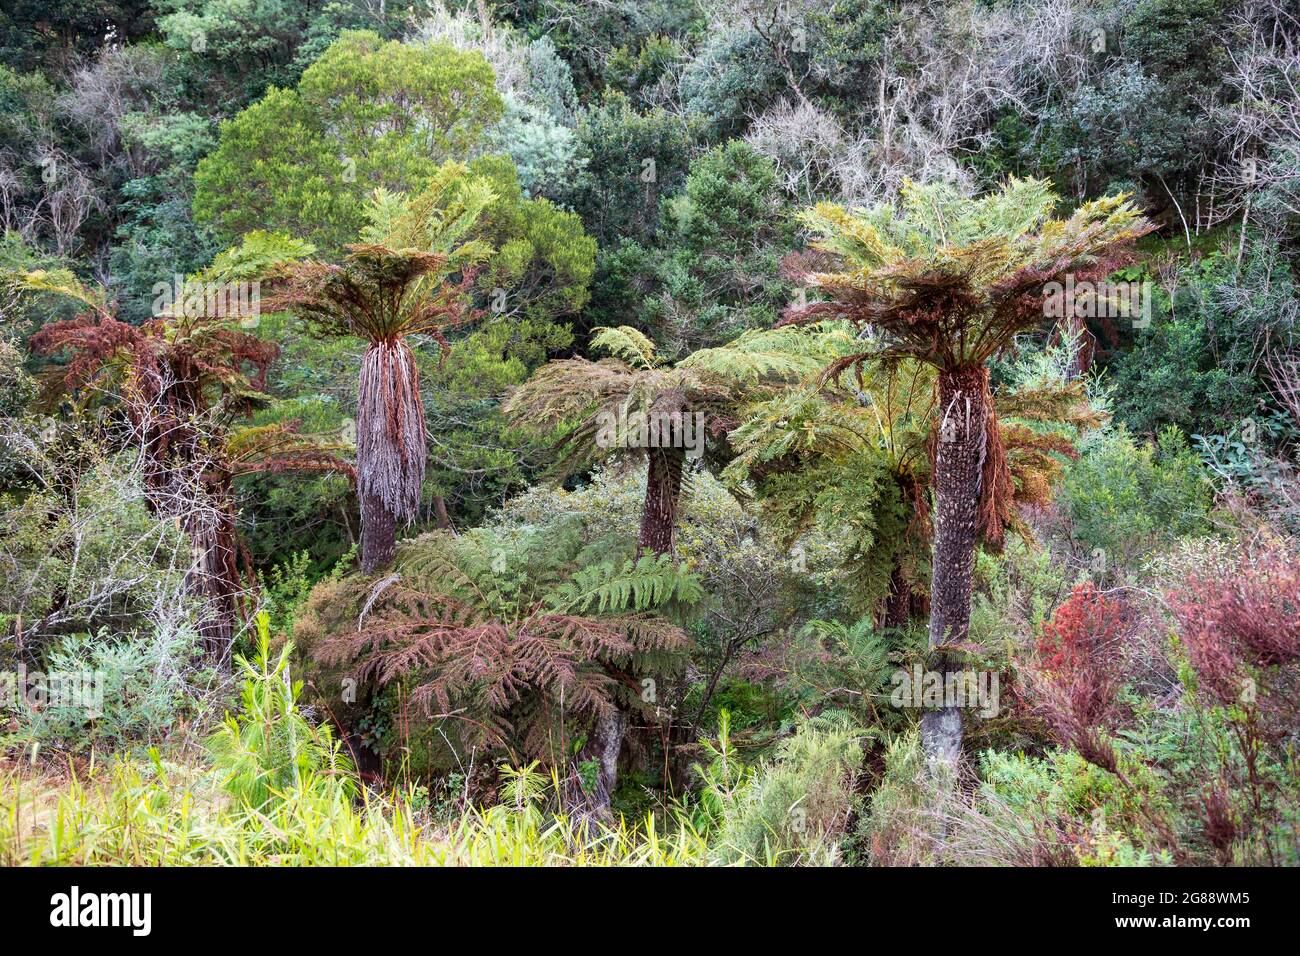 Common tree ferns Alsophila dregei along Mac Mac River, Mpumalanga, South Africa Stock Photo